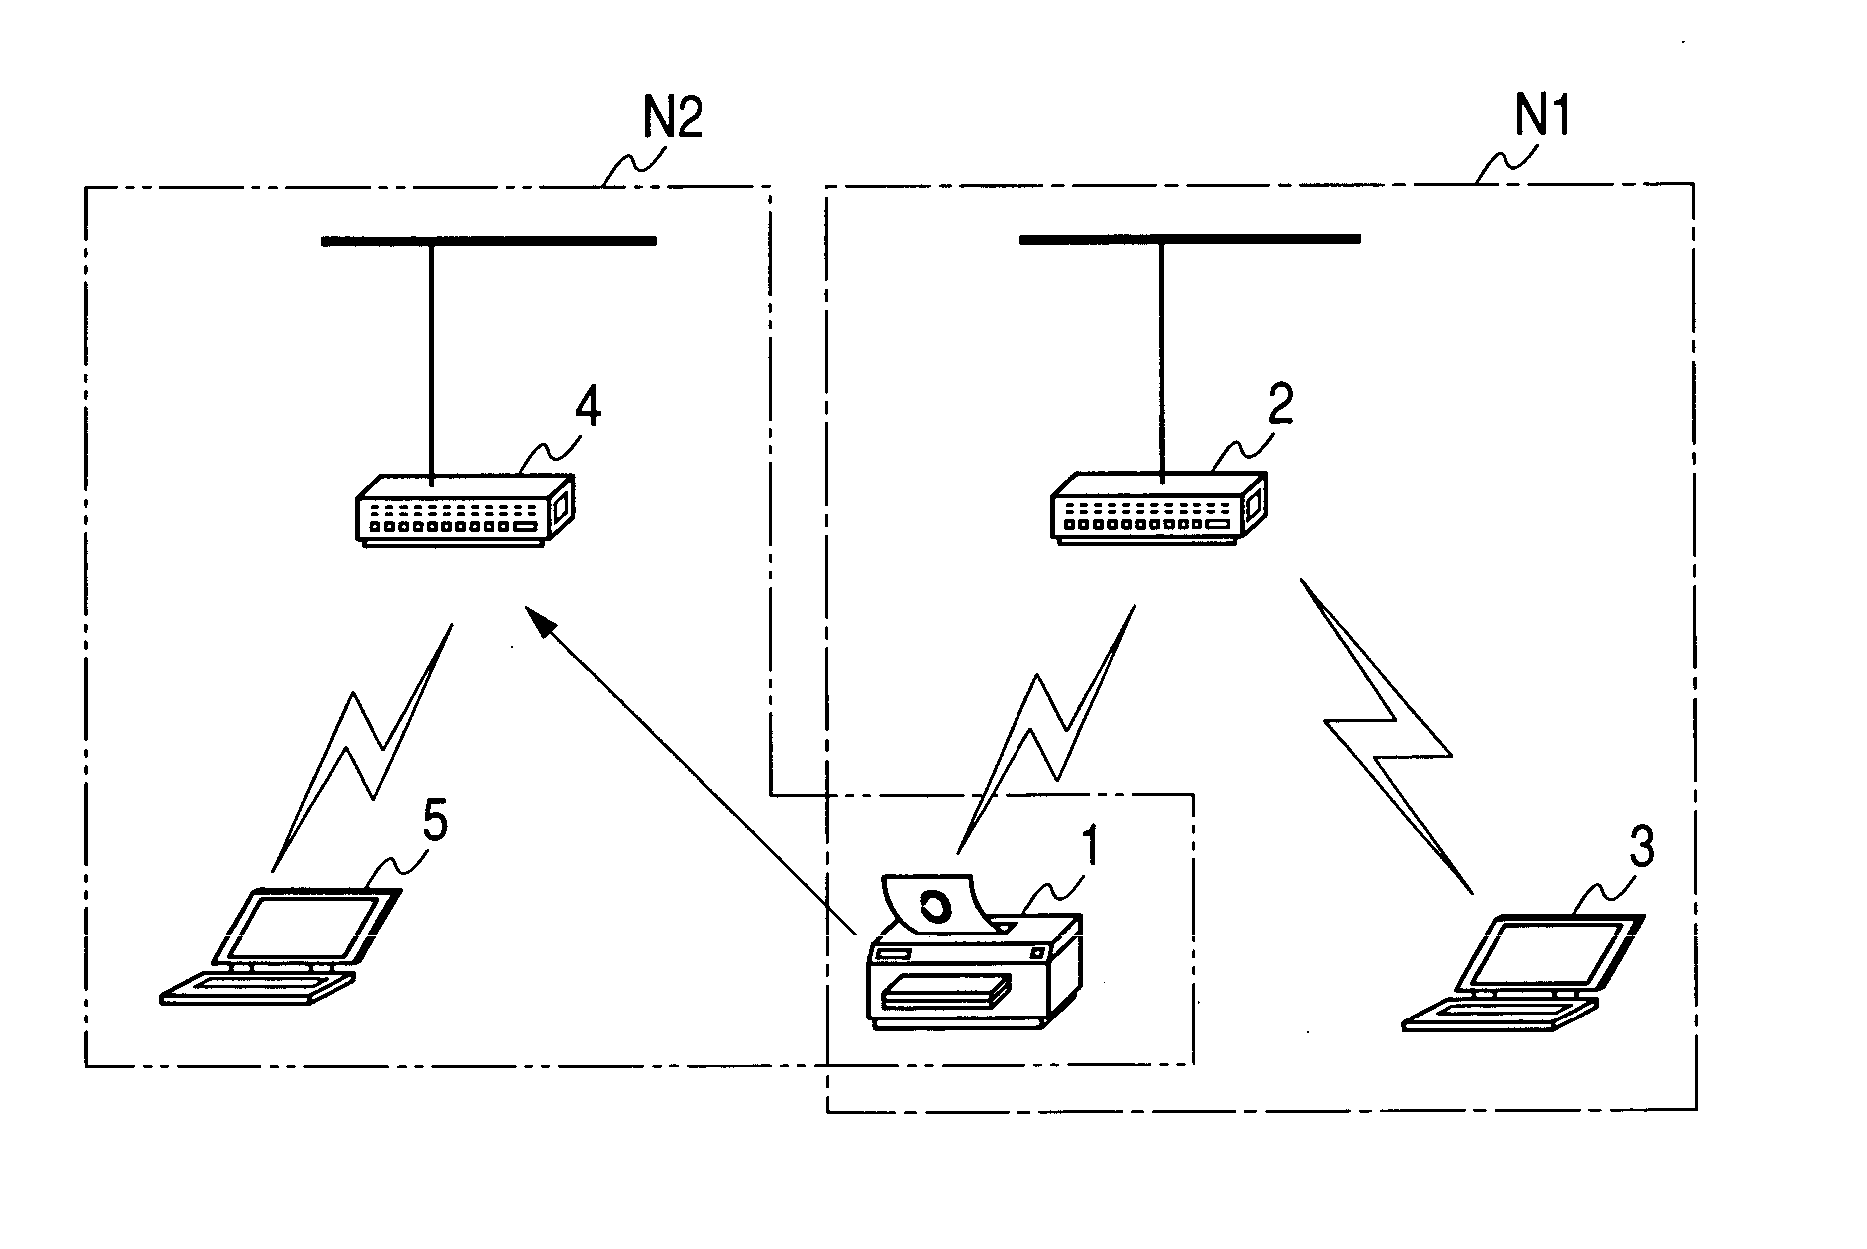 Network apparatus